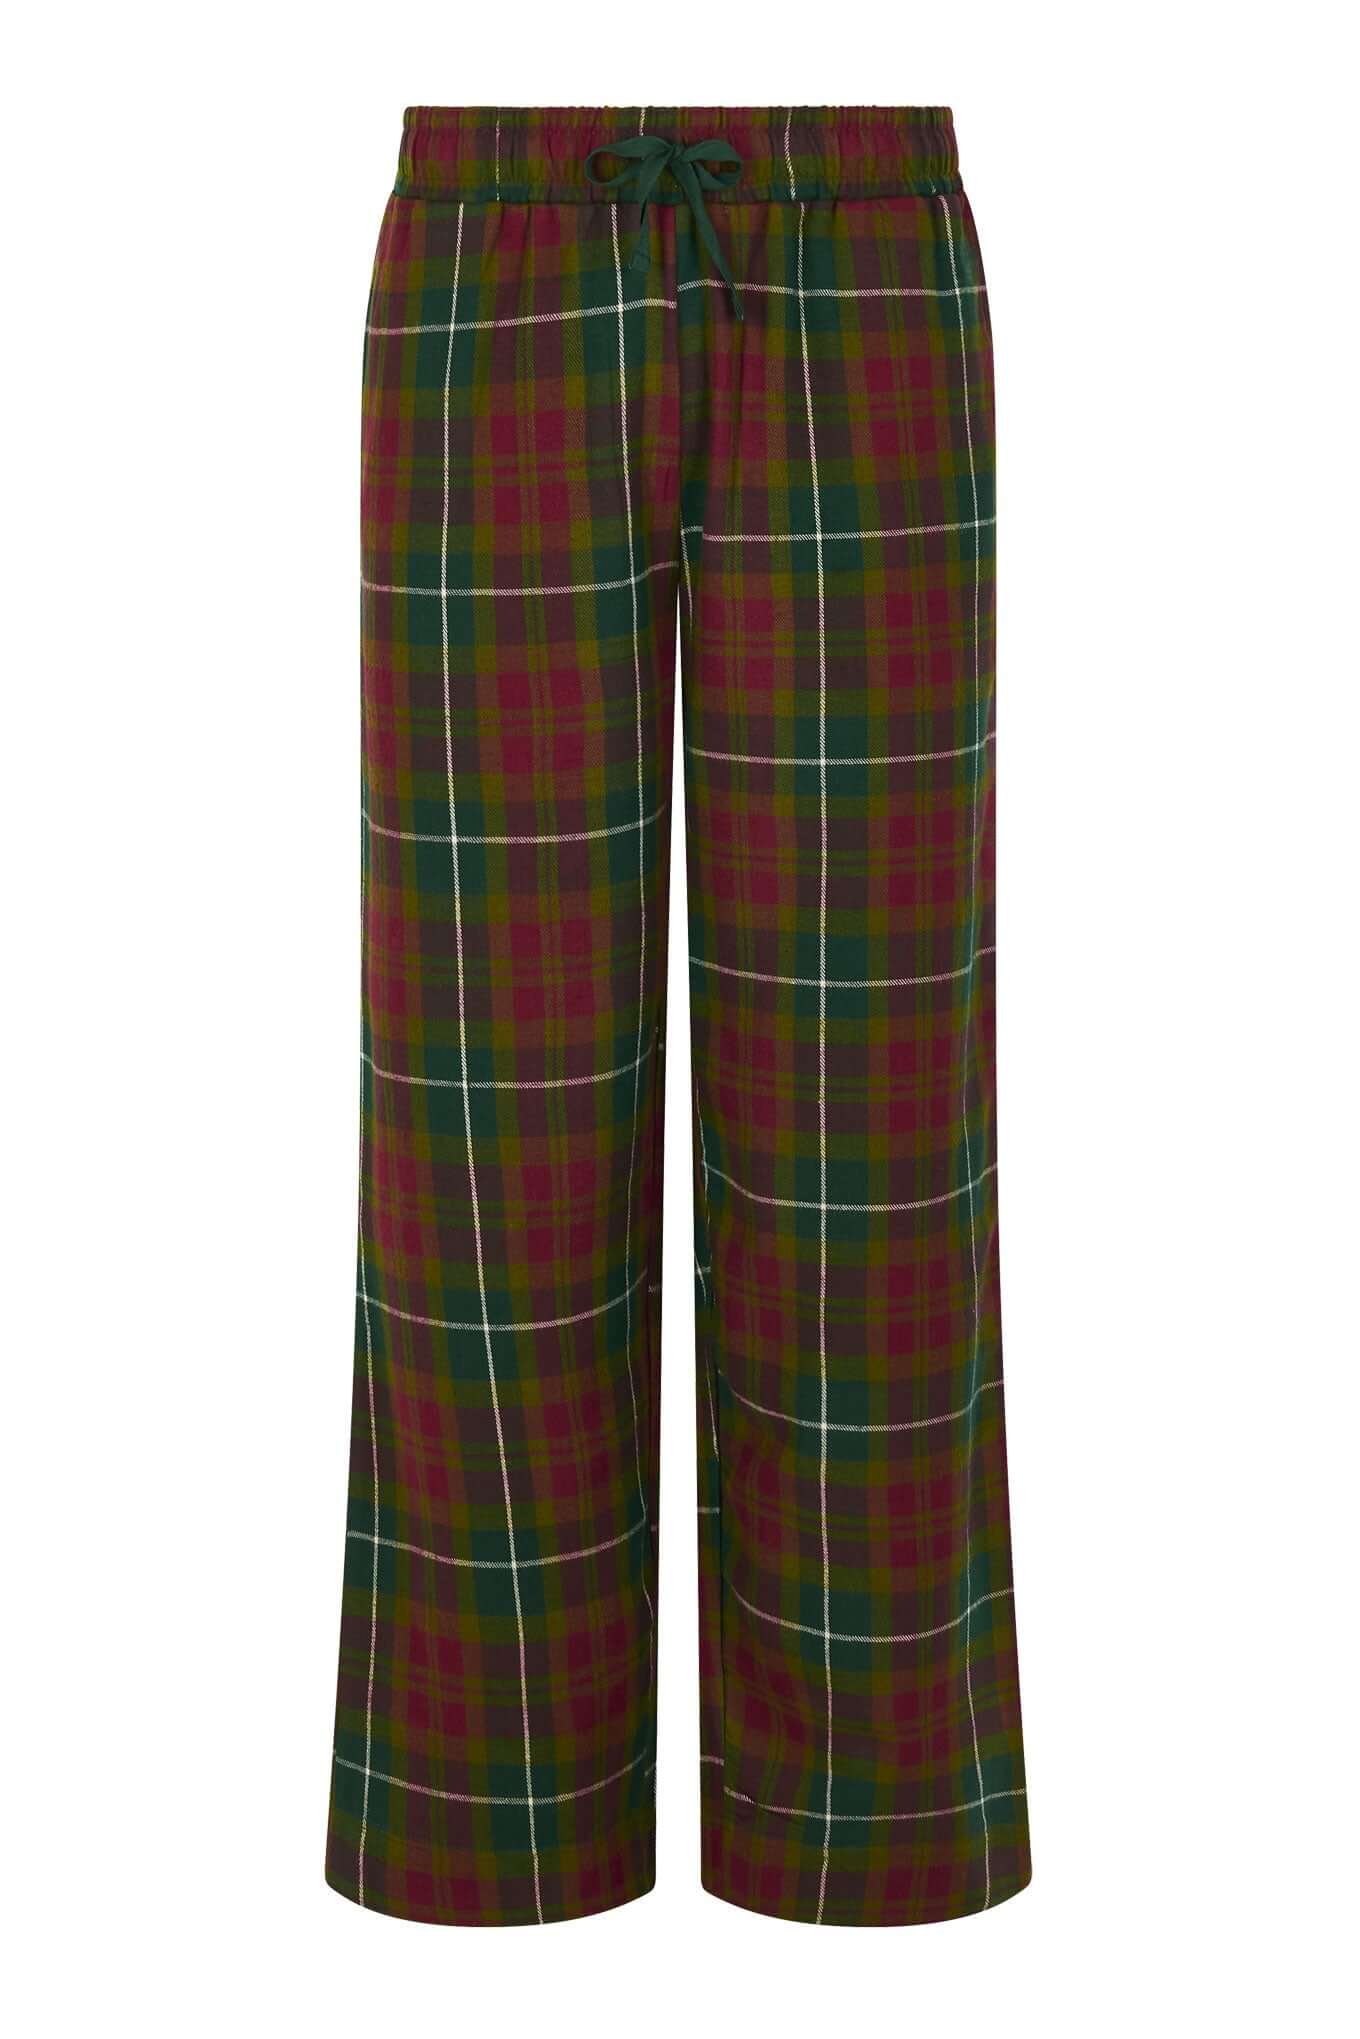 Pantalon de pyjama coloré JIM JAM en coton 100% biologique de Komodo